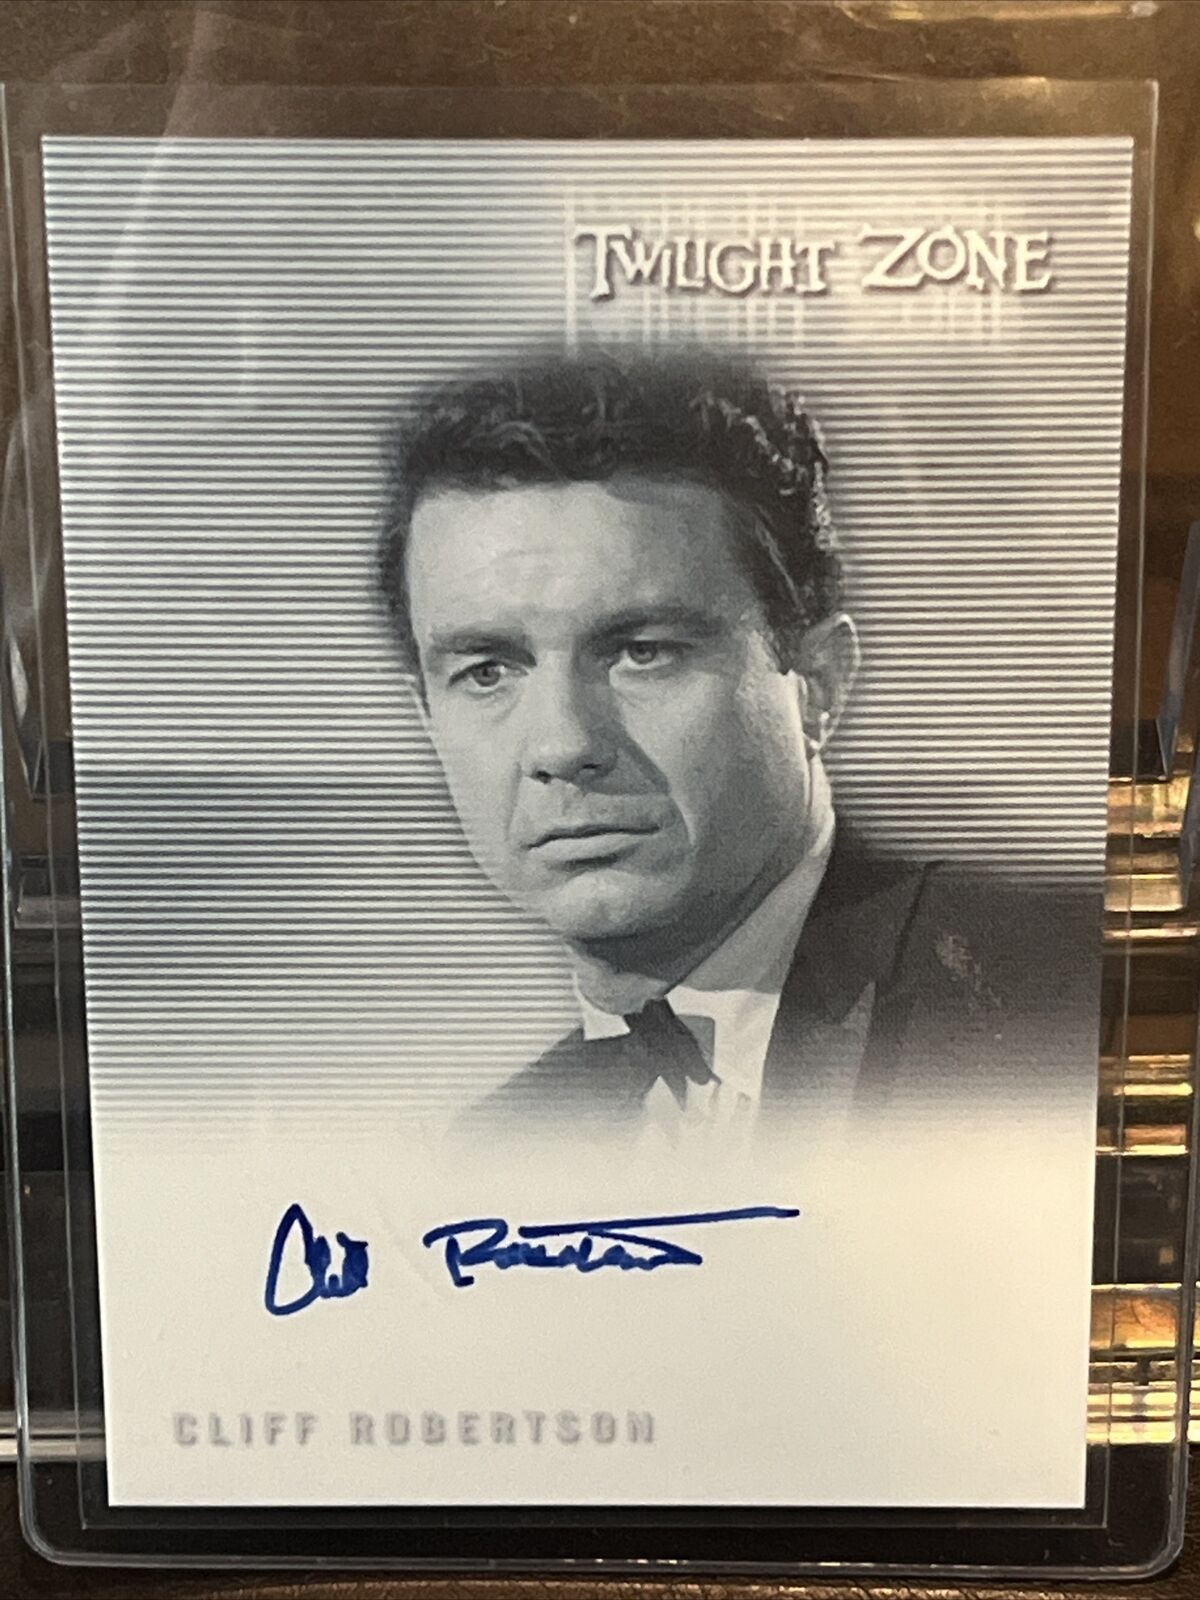 2009 Rittenhouse Twilight Zone 50th Anniversary Cliff Robertson Autograph Card